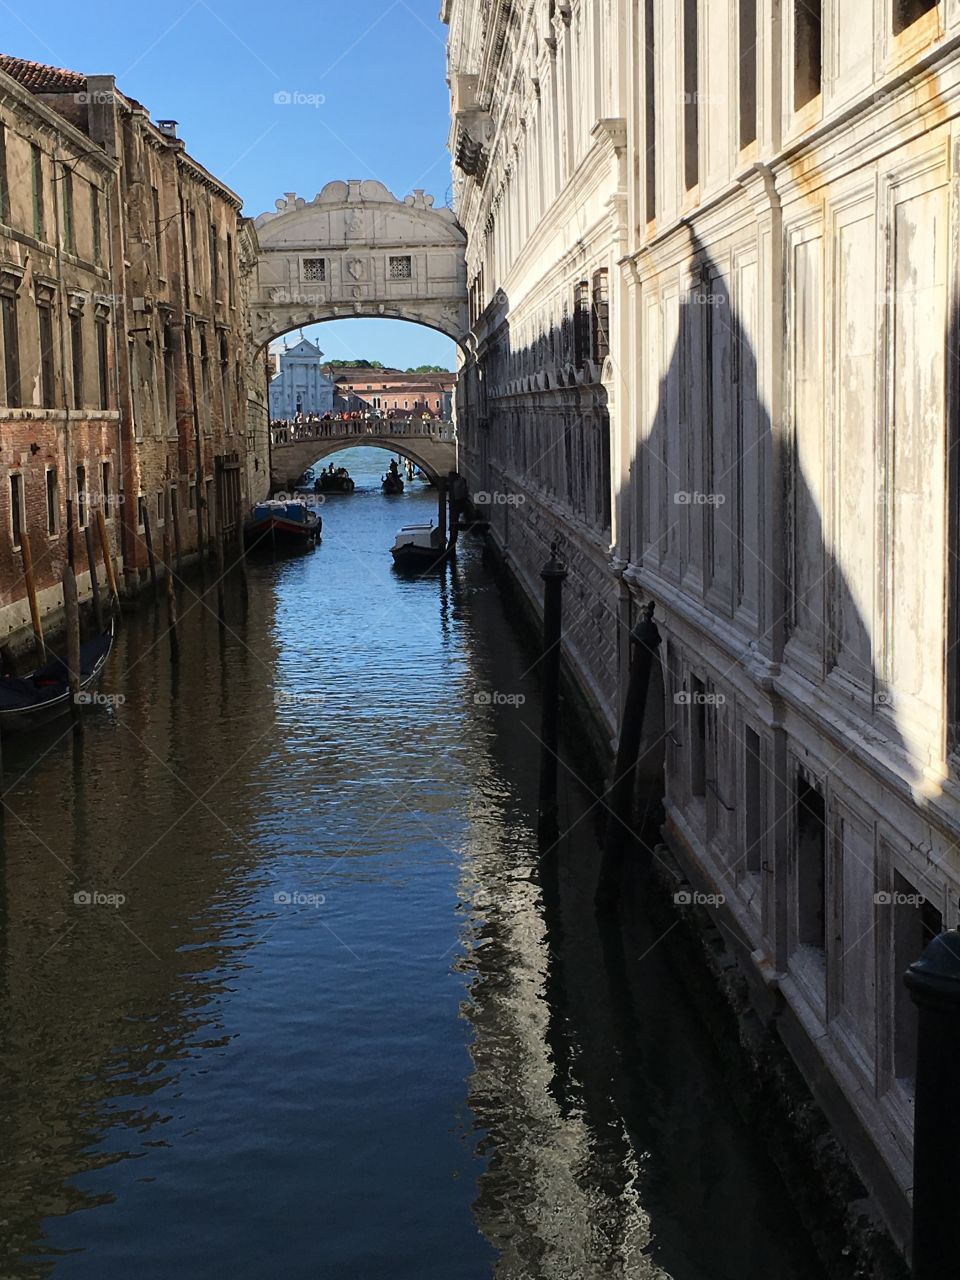 Waiting for Gondola in Venice 